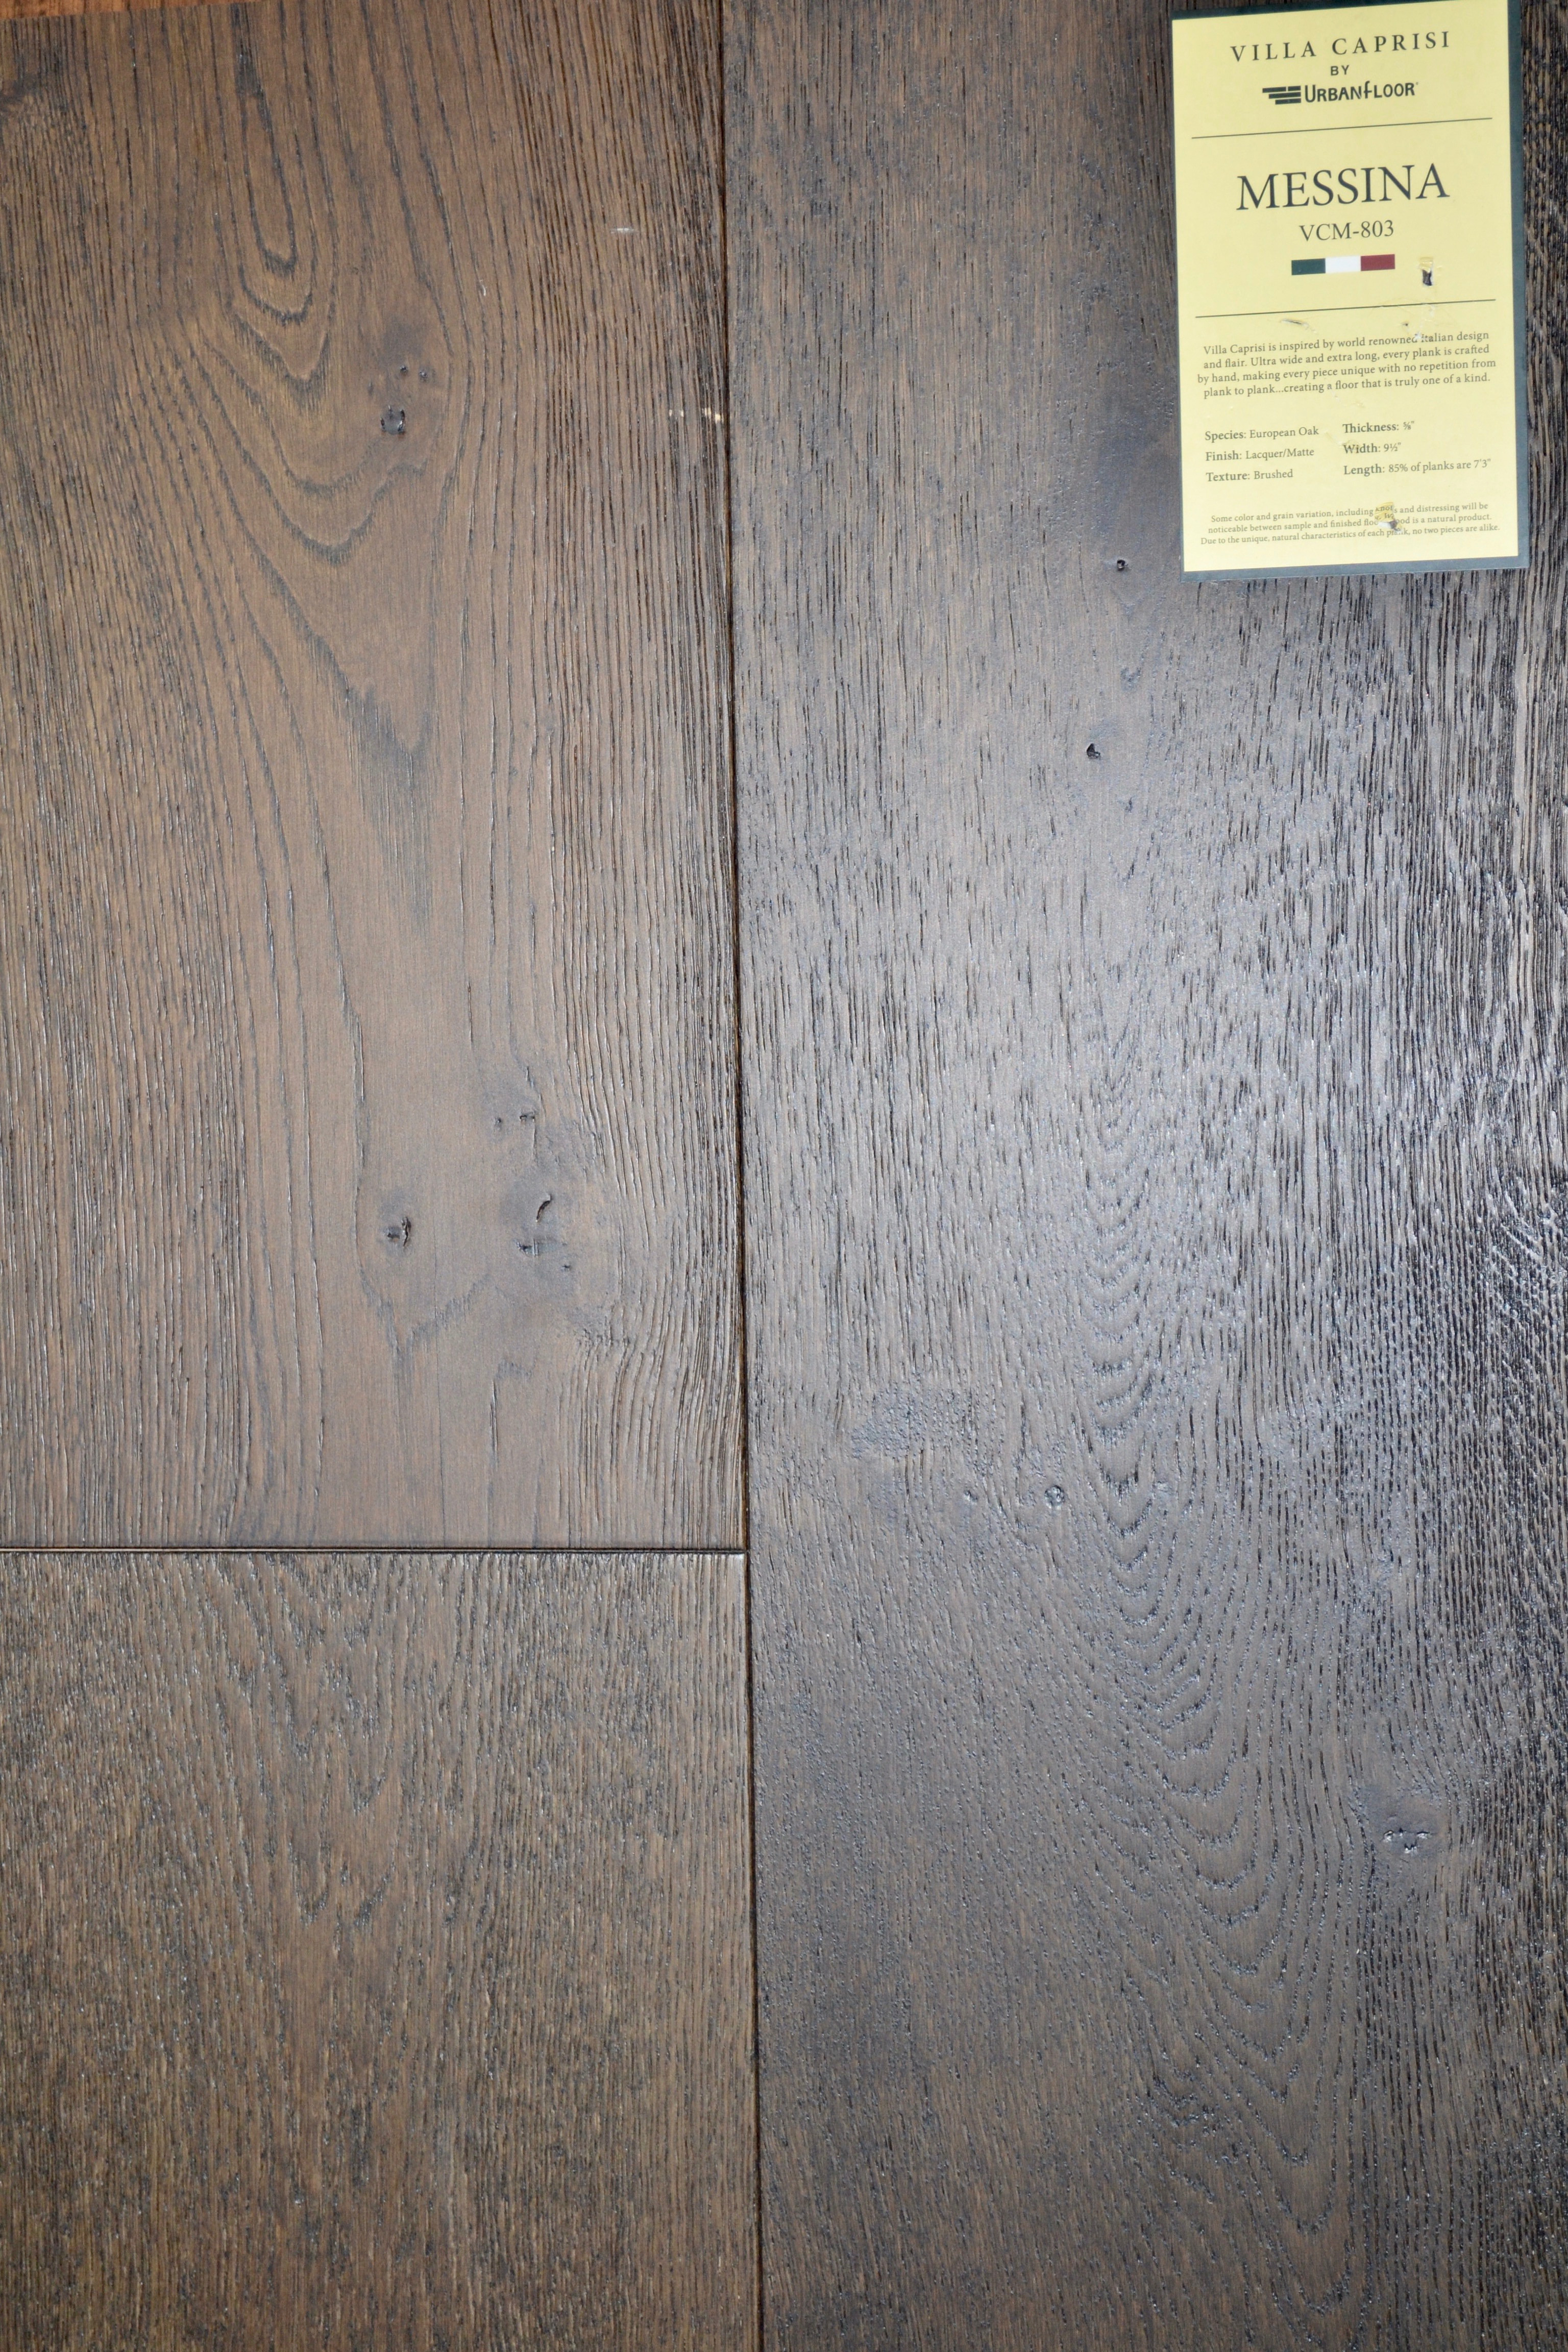 3 4 inch solid hardwood flooring of villa caprisi fine european hardwood millennium hardwood with regard to european style inspired designer oak floor messina by villa caprisi